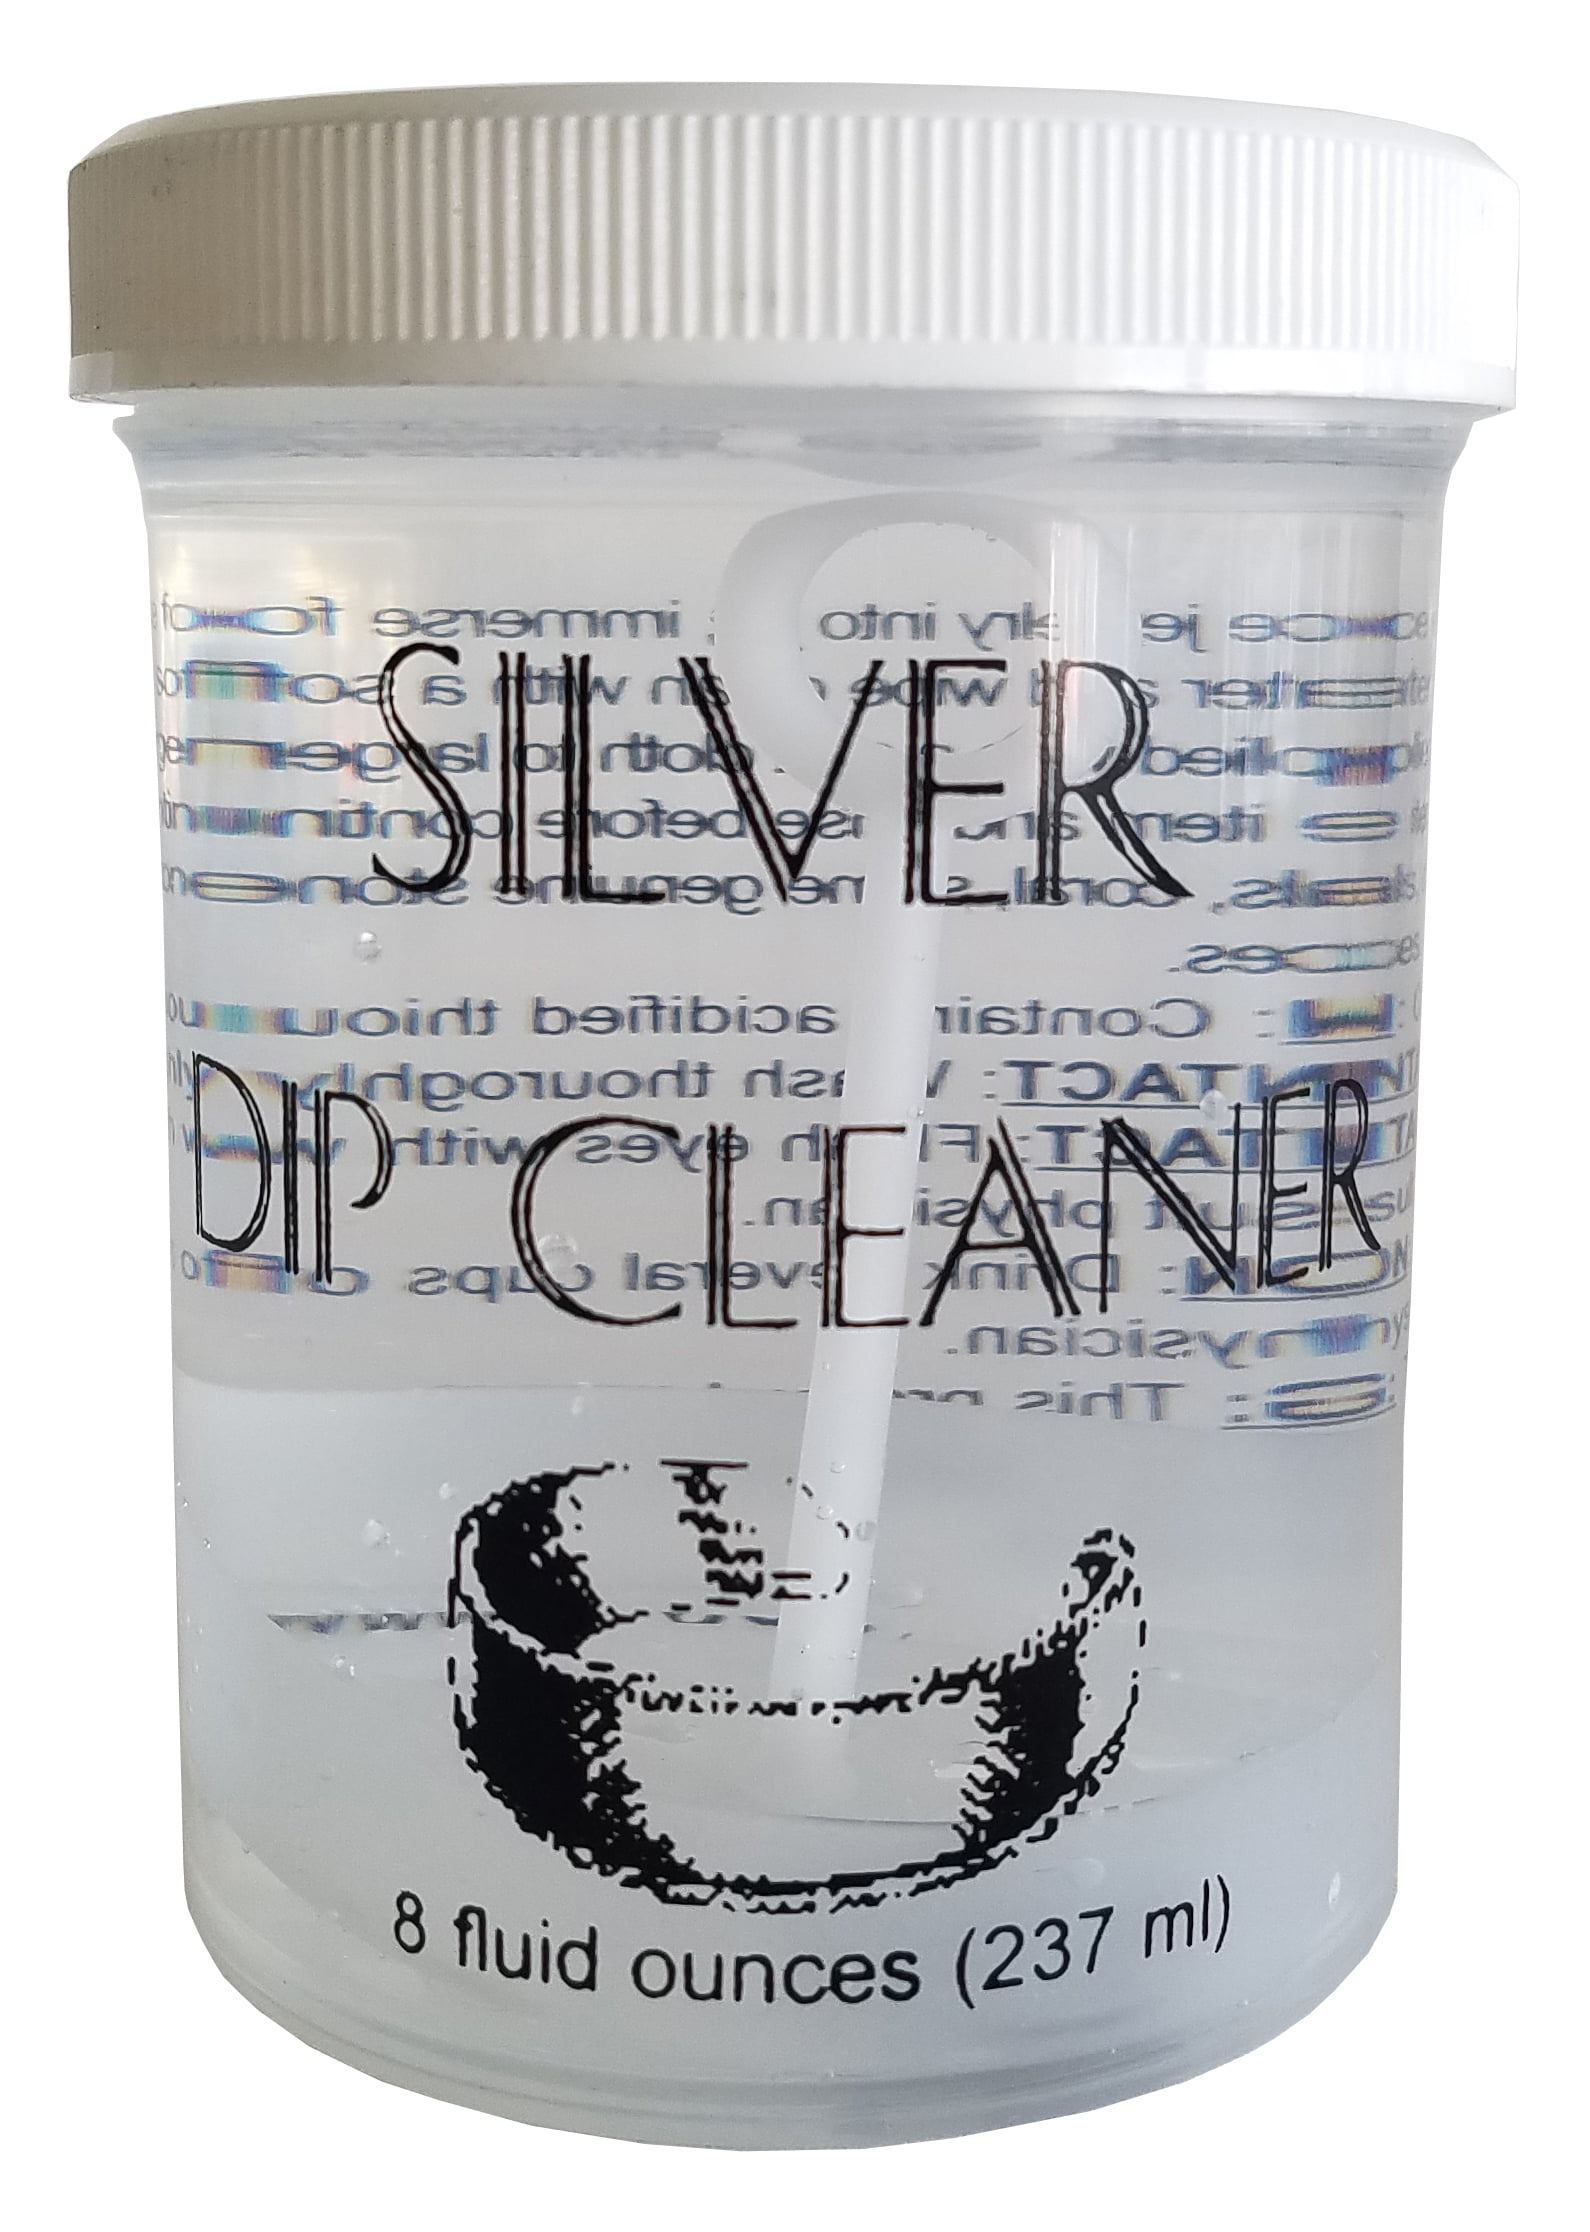 JSP® Silver dip cleaner 8 ounces with basket. 24 jars (us155x24) 